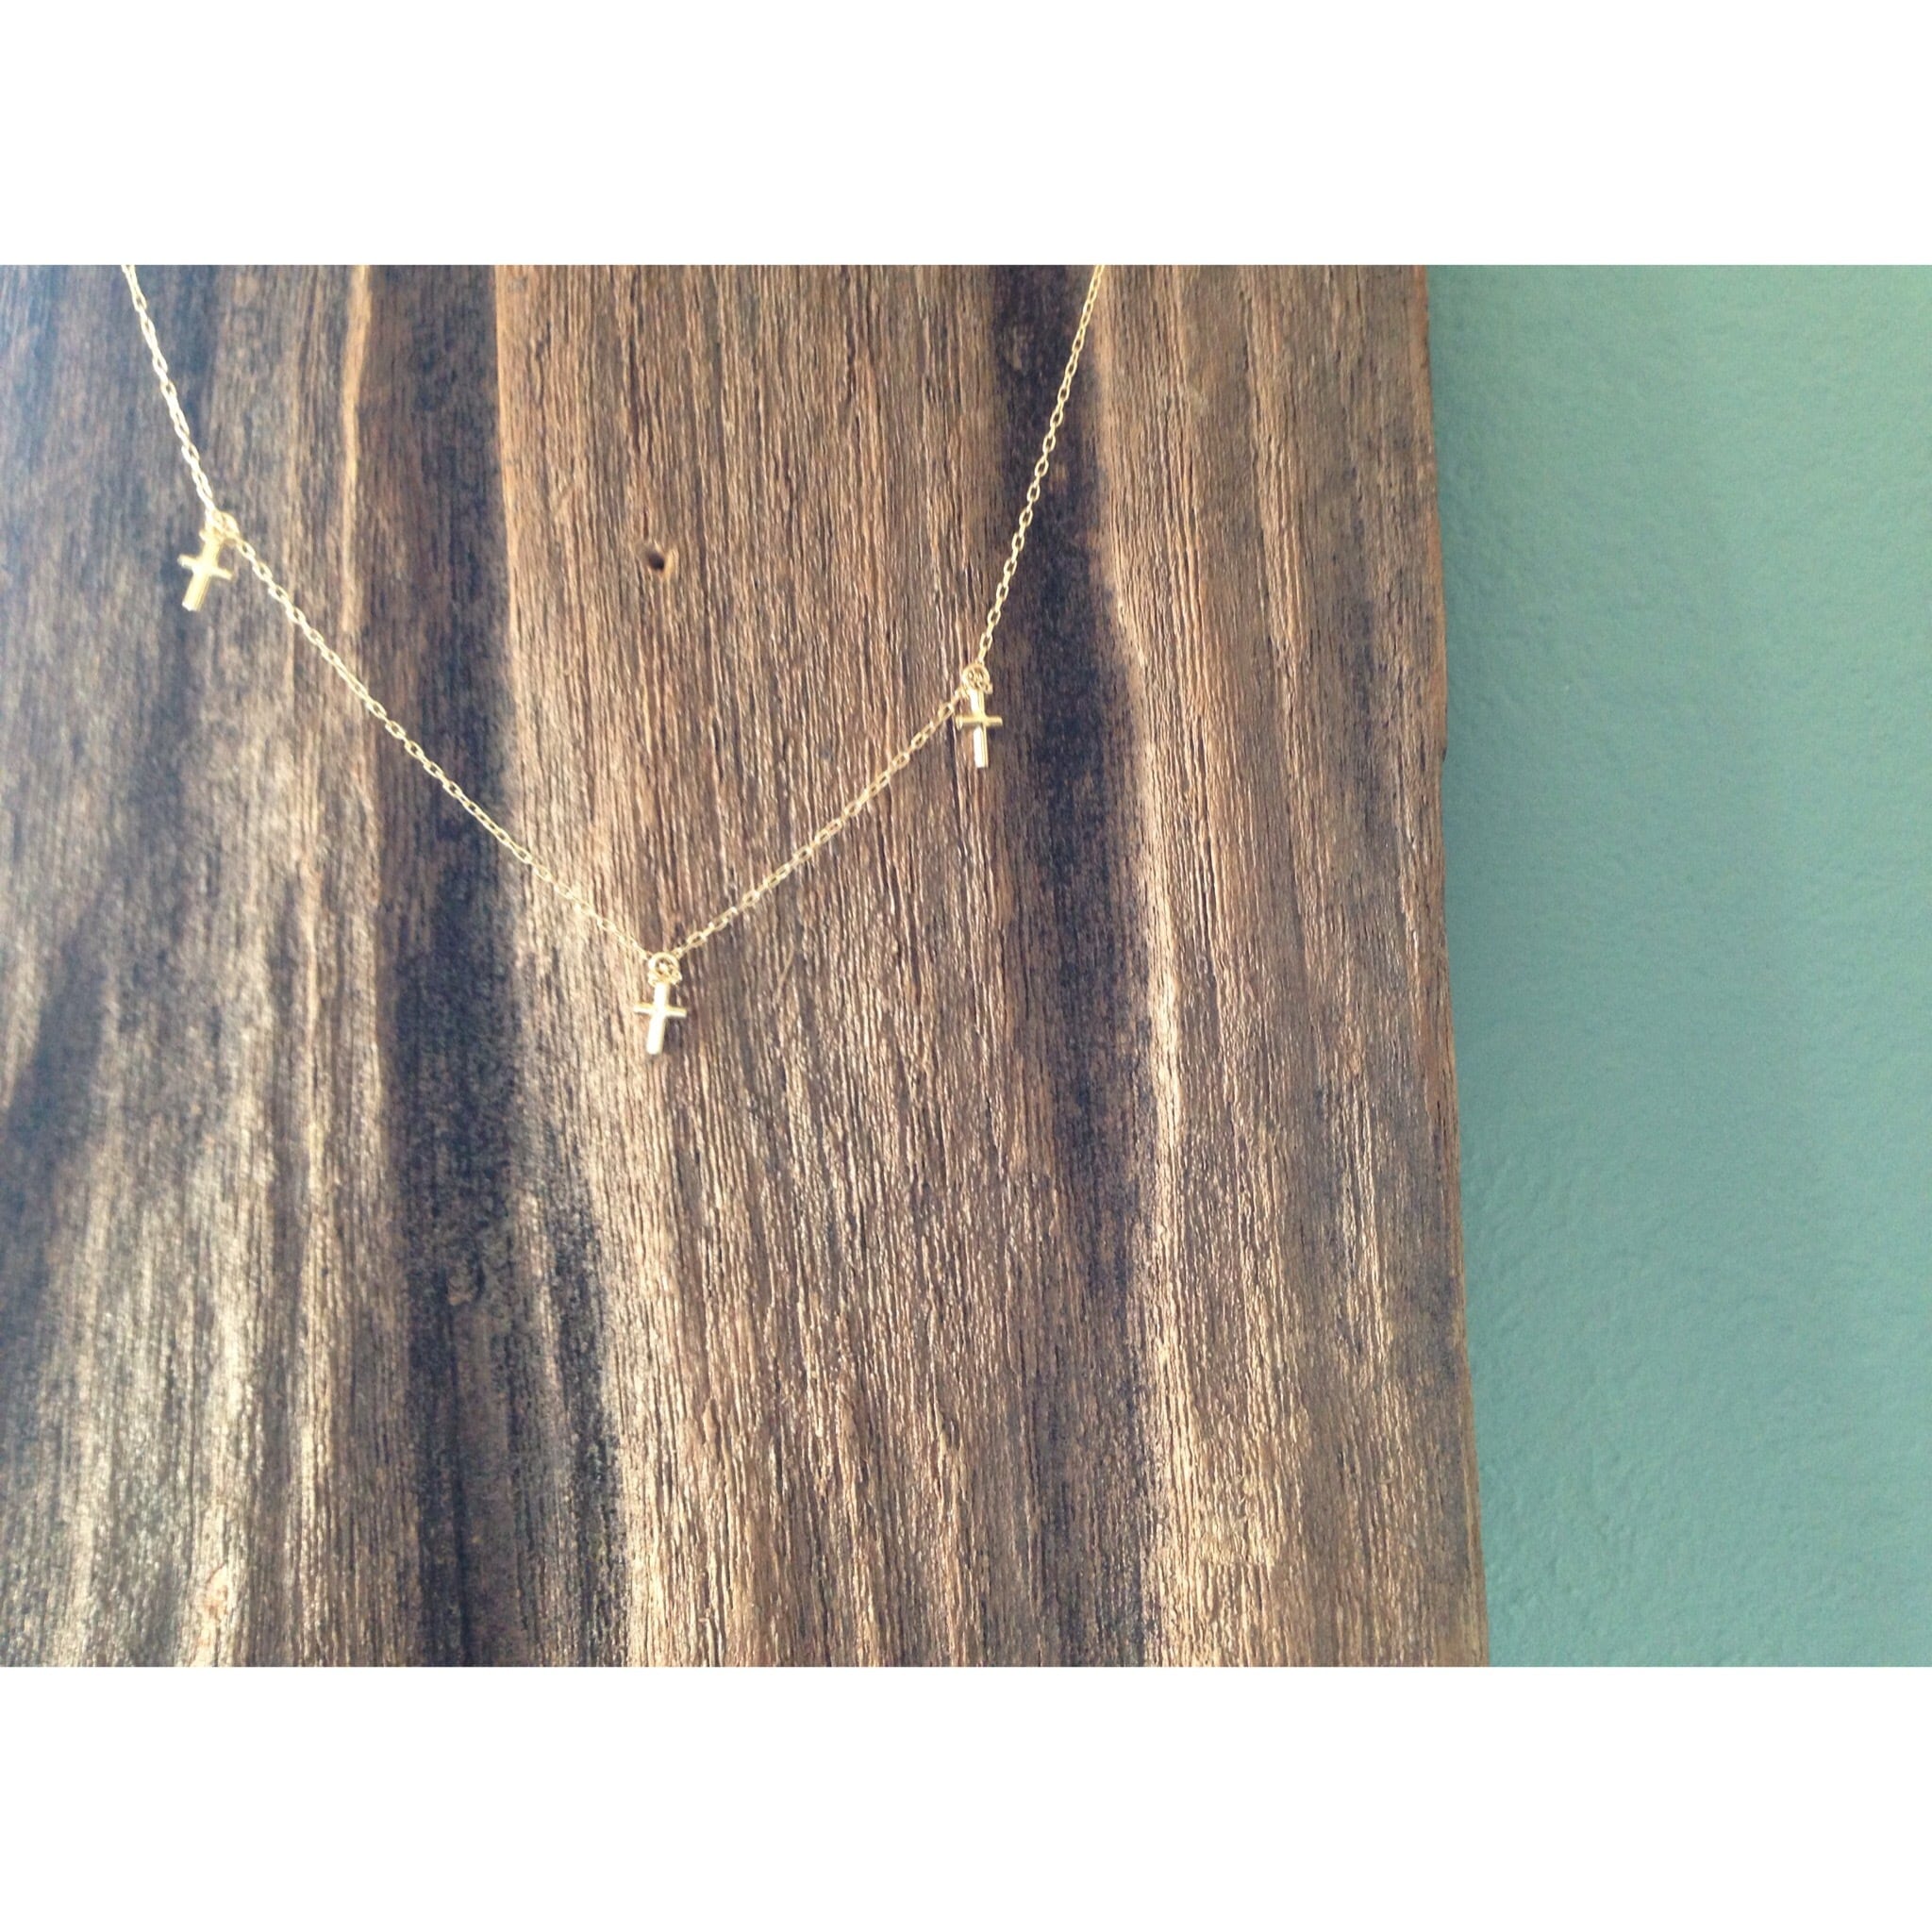 K18cross+++necklace